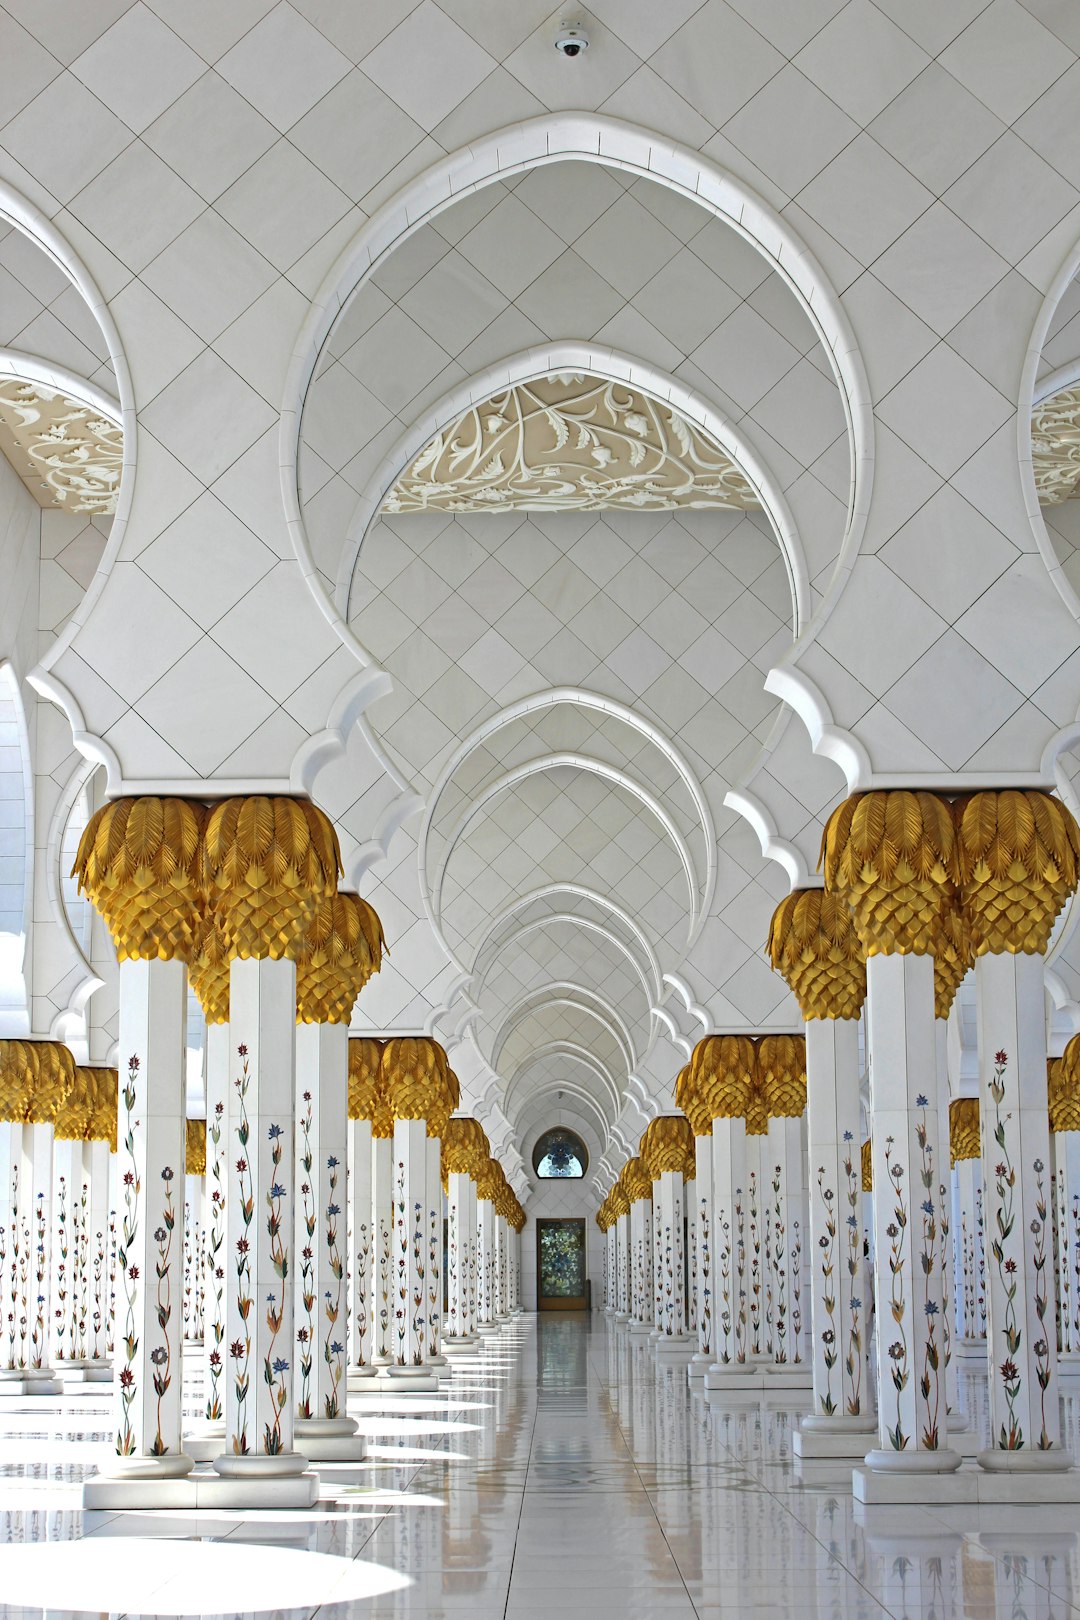 Place of worship photo spot Abu Dhabi Al Dhafra - Abu Dhabi - United Arab Emirates